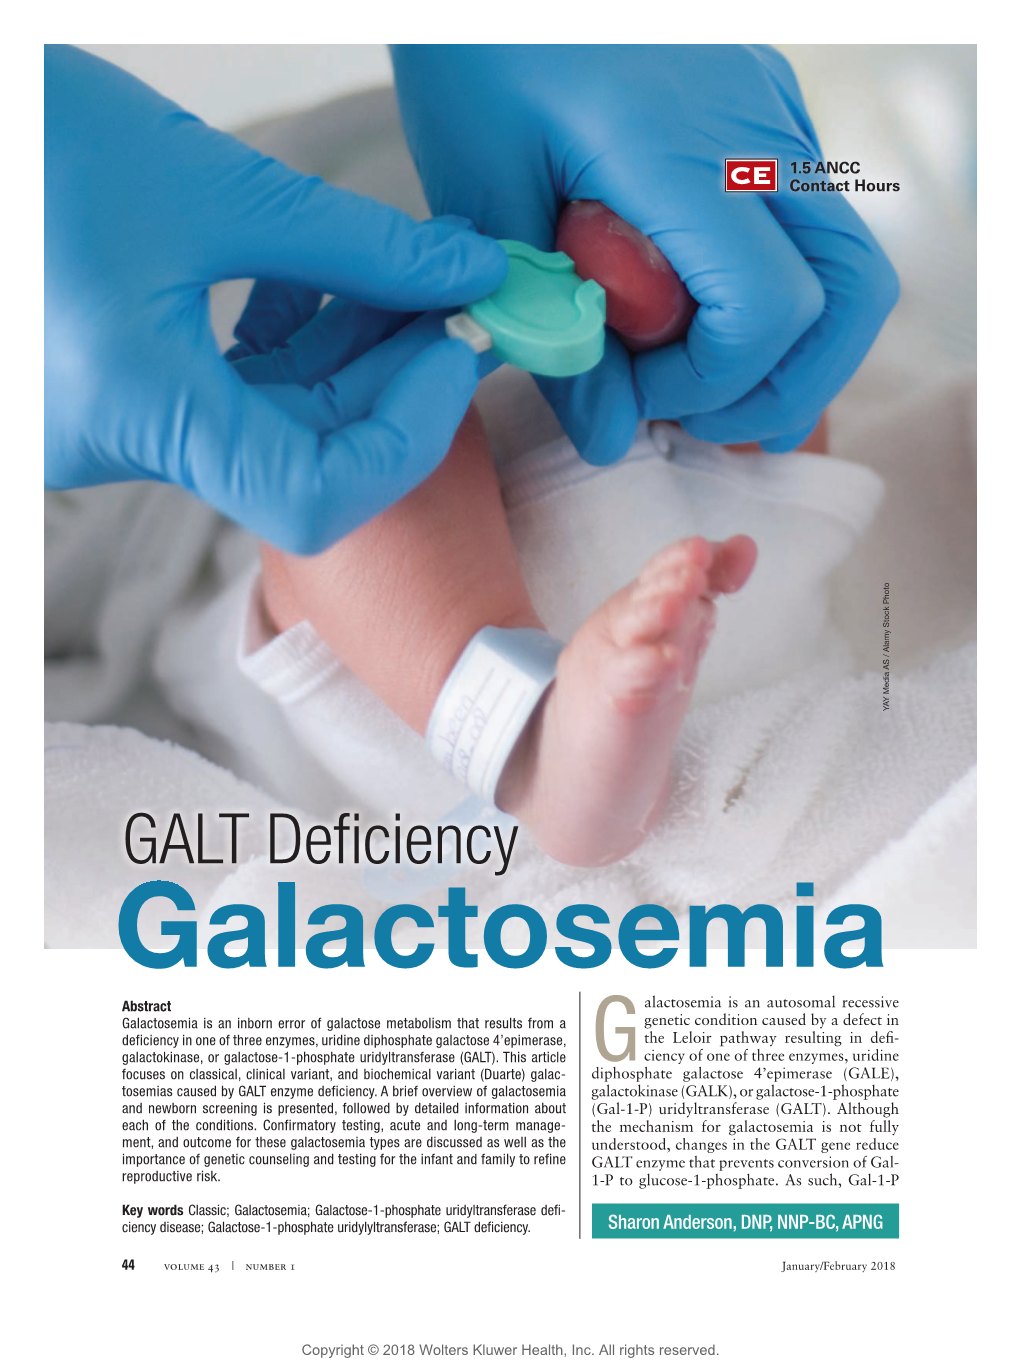 GALT Deficiency